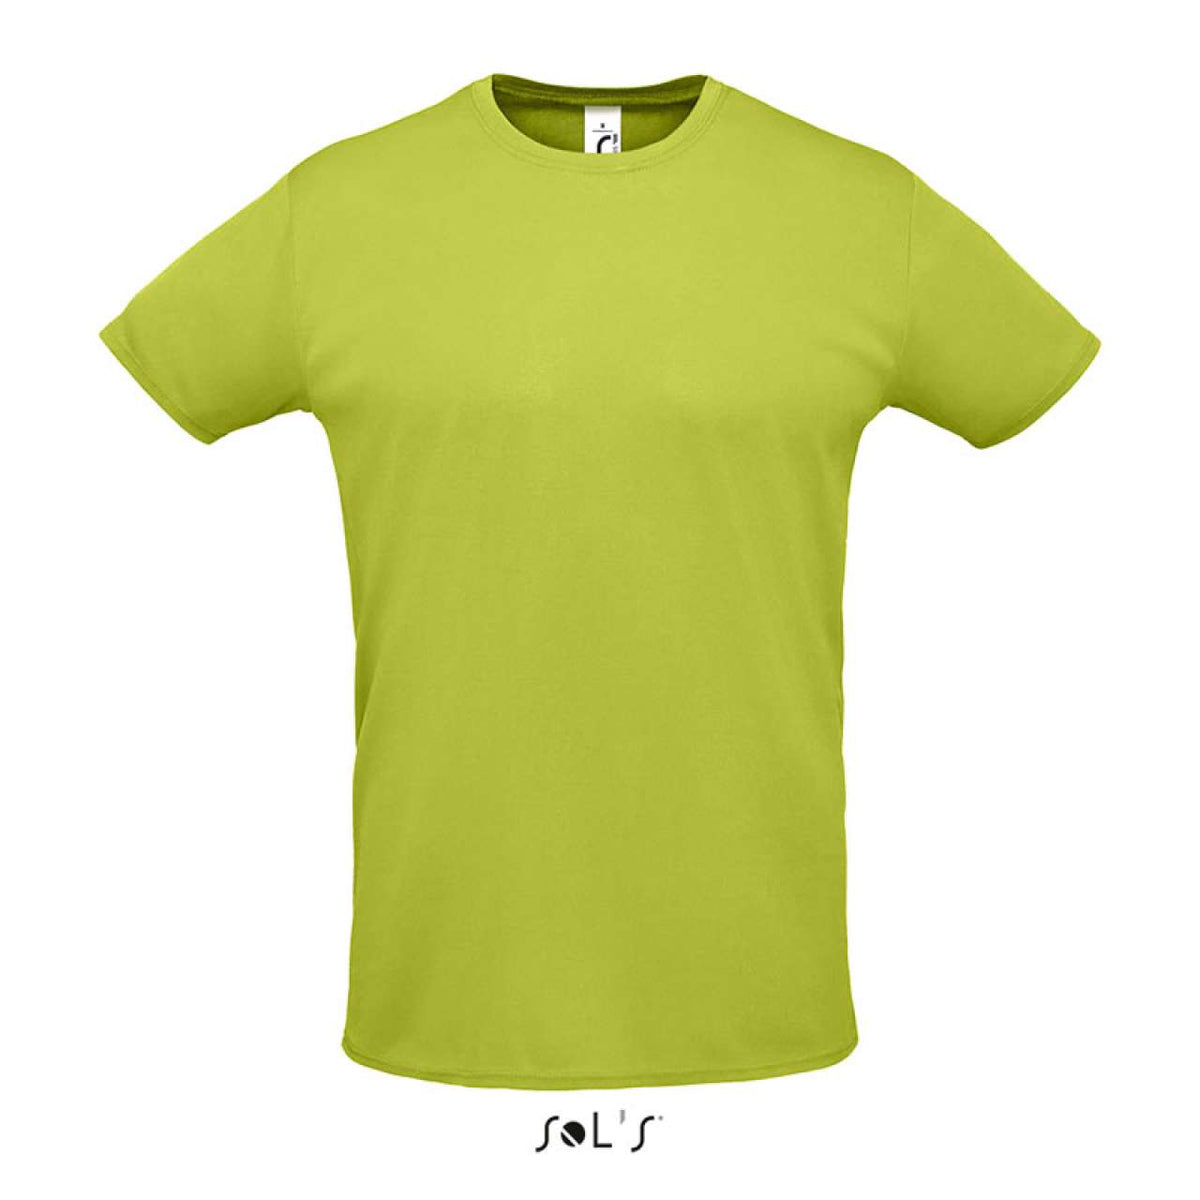 SOL'S UNI Sport T-Shirt Basic Shirts Baumwolle Tshirt Kurzarm Sports